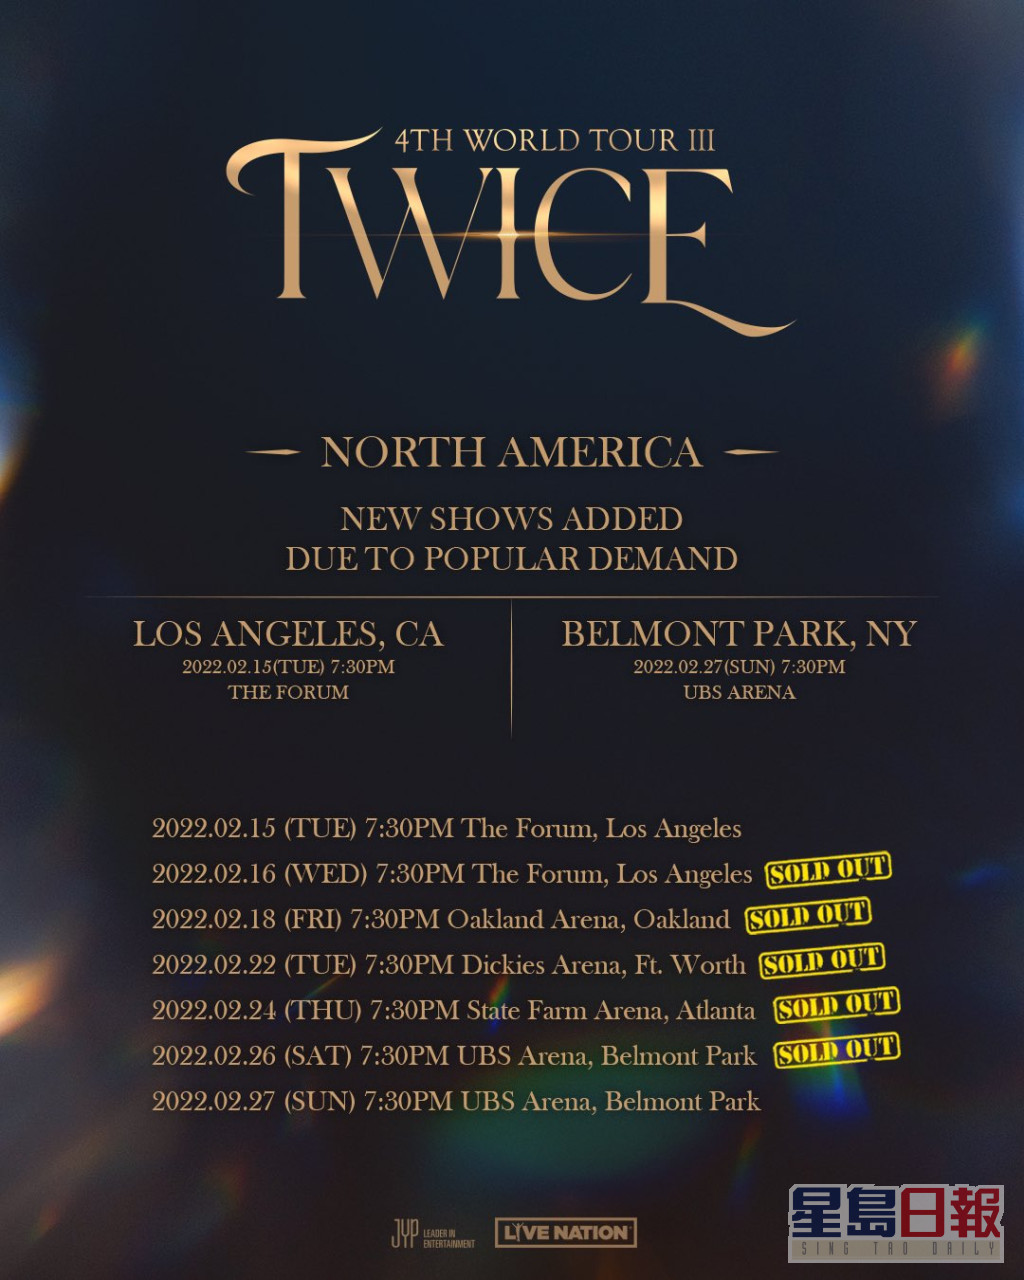 TWICE于明年举行北美演唱会，大部分场次已售罄，并宣布加场。